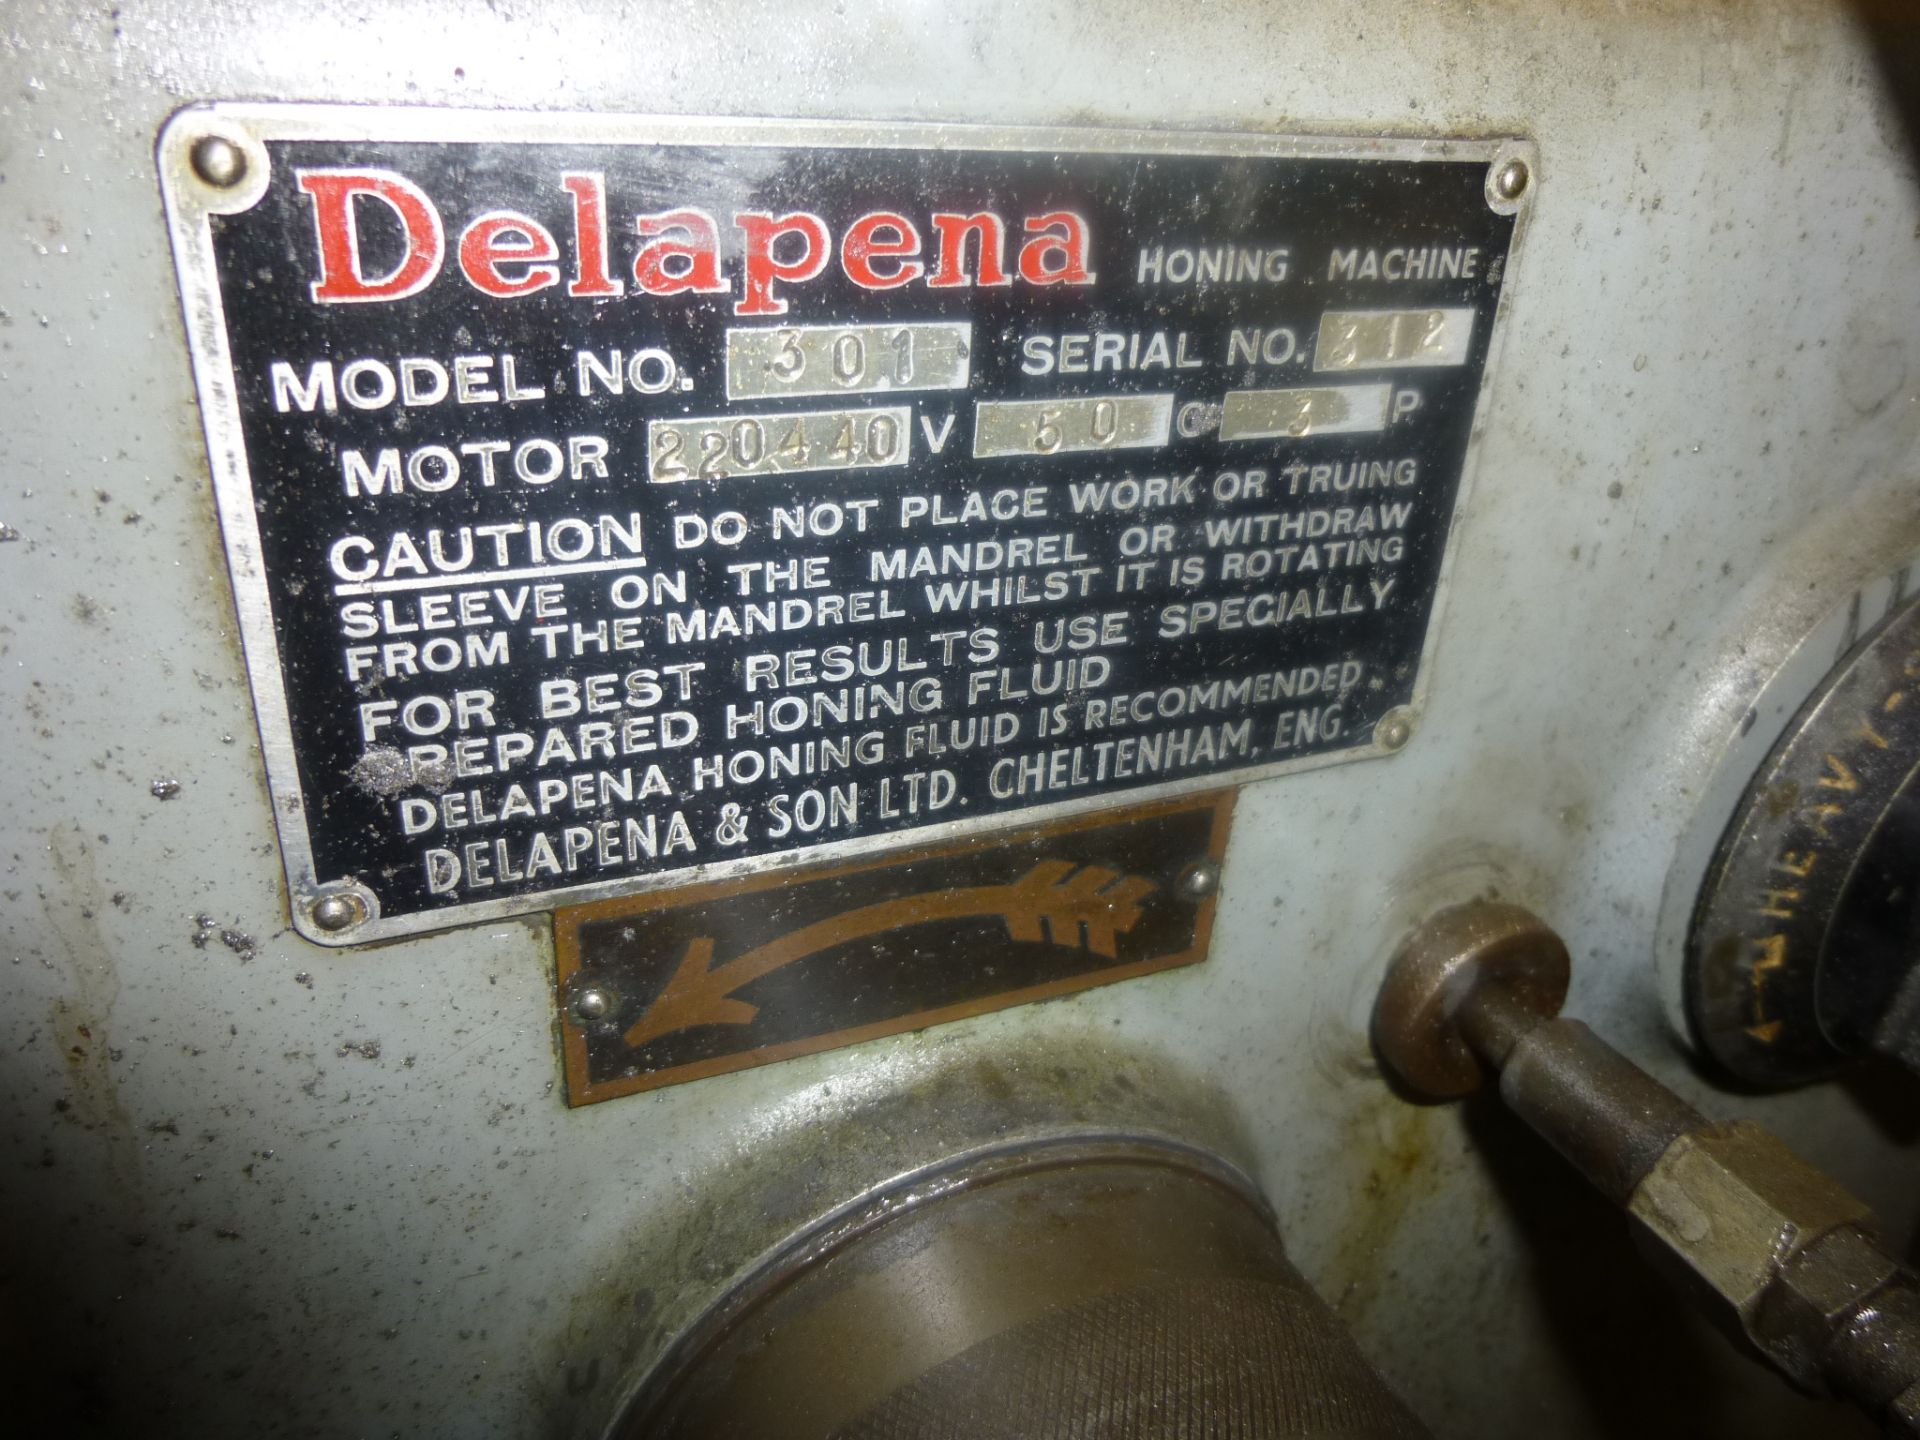 Delapena 301 honing machine - Image 3 of 3